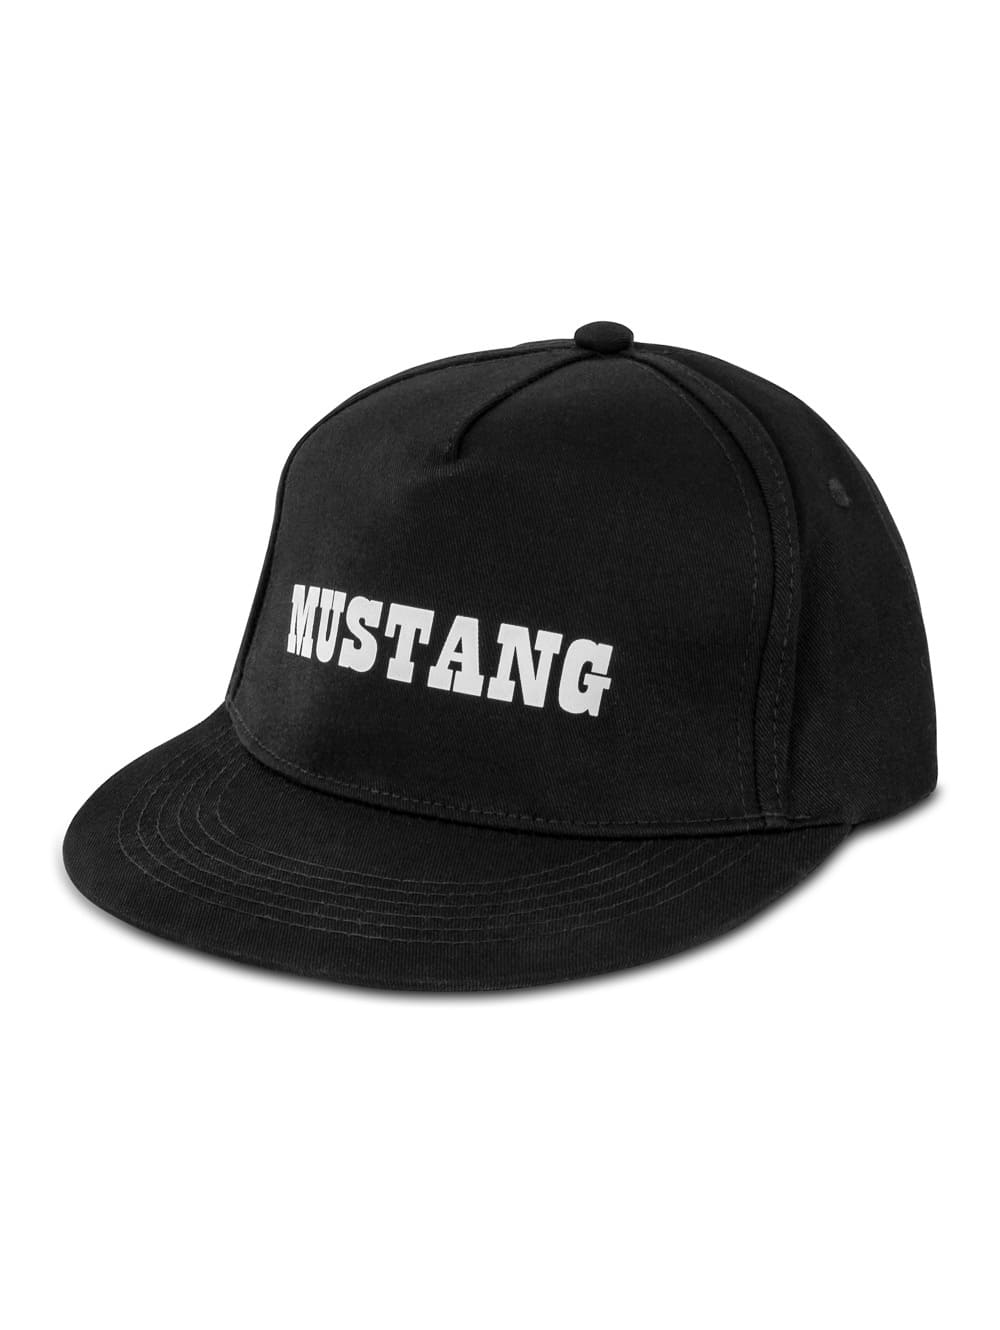 Одежда - Бейсболка Mustang MBC01 Черная Фото 1